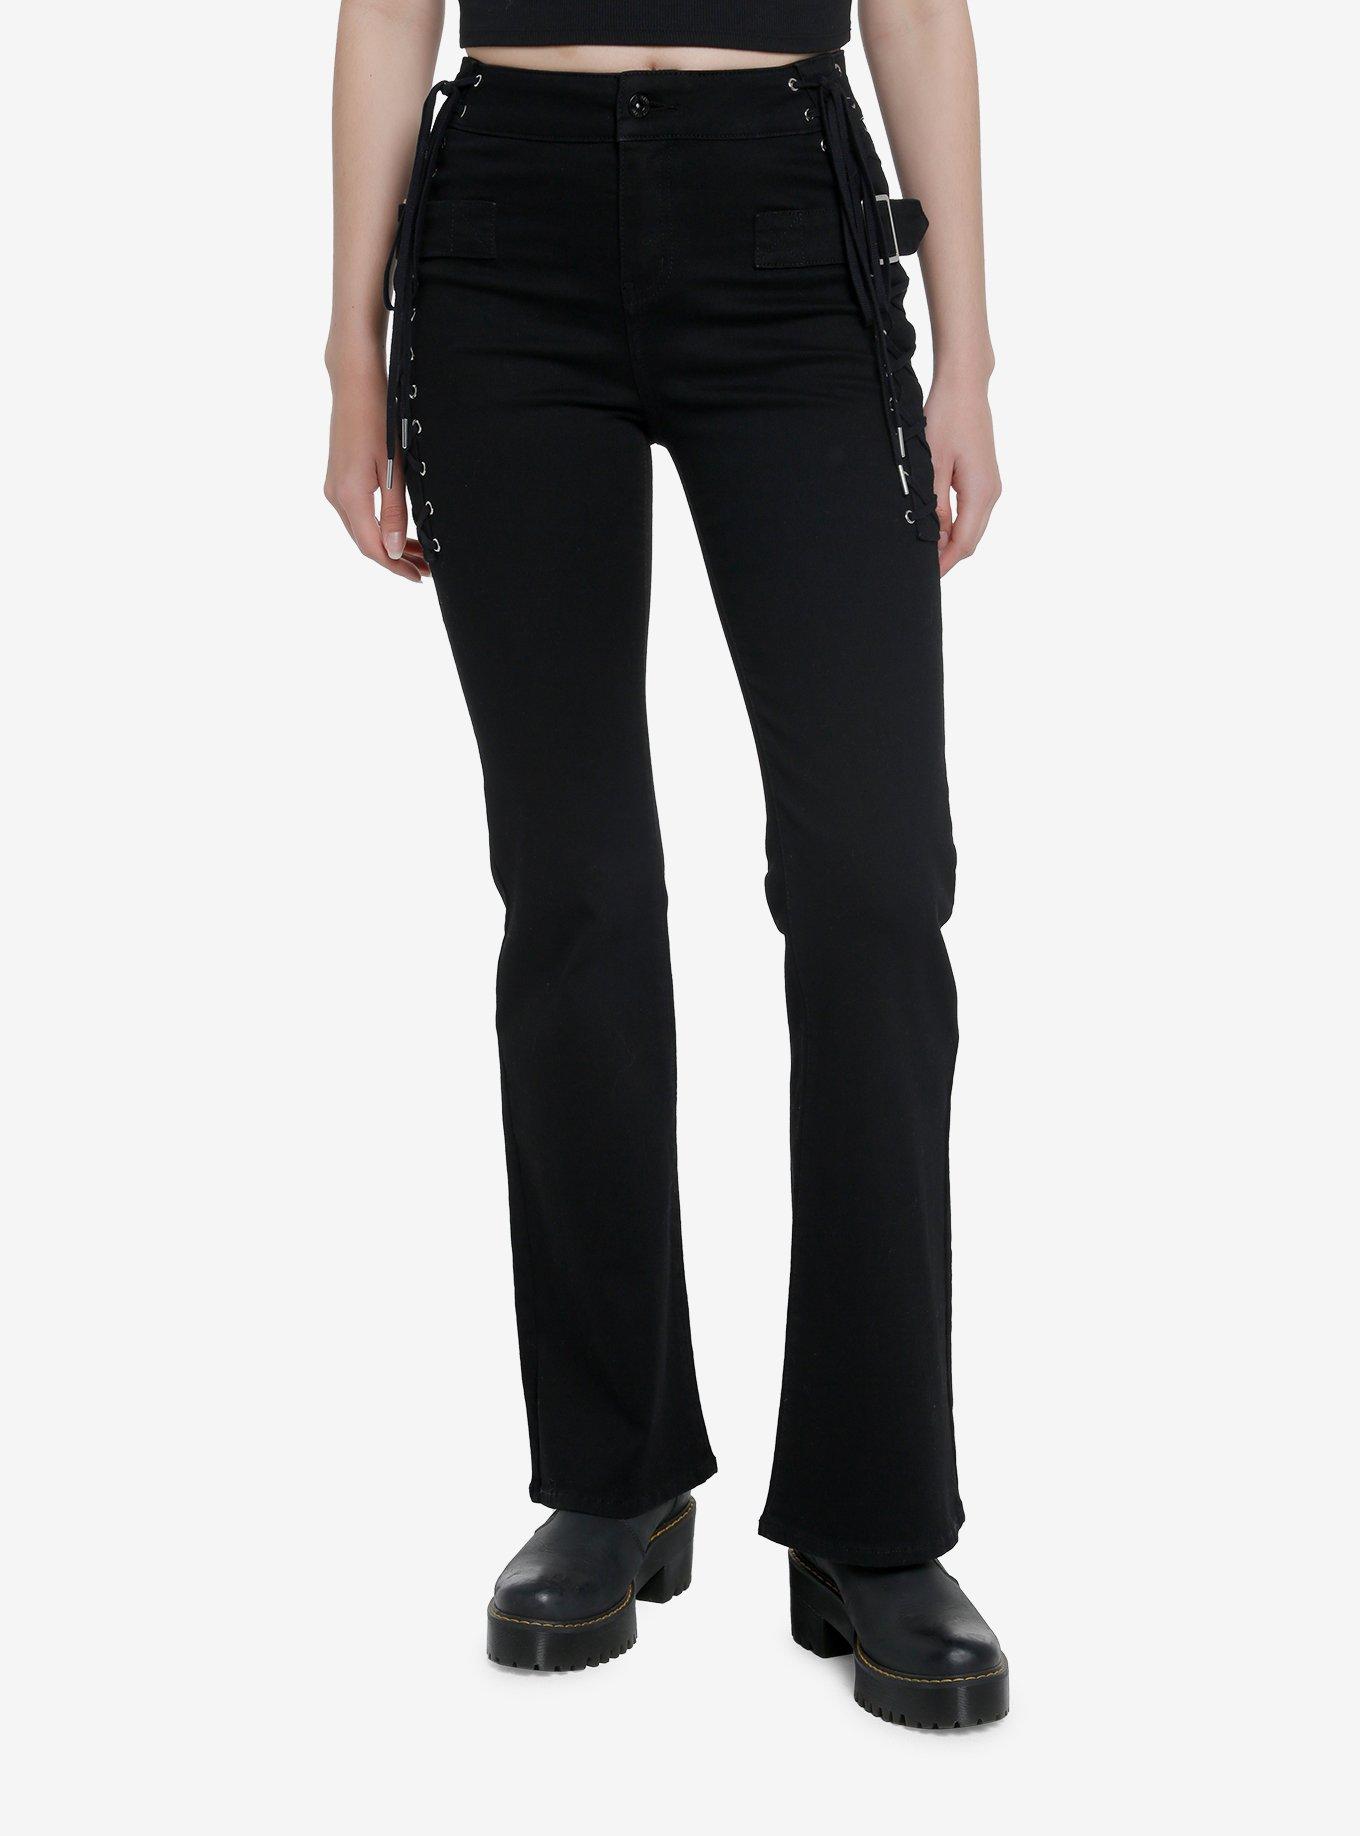 Black Lace-Up Flare Denim Pants, BLACK, alternate